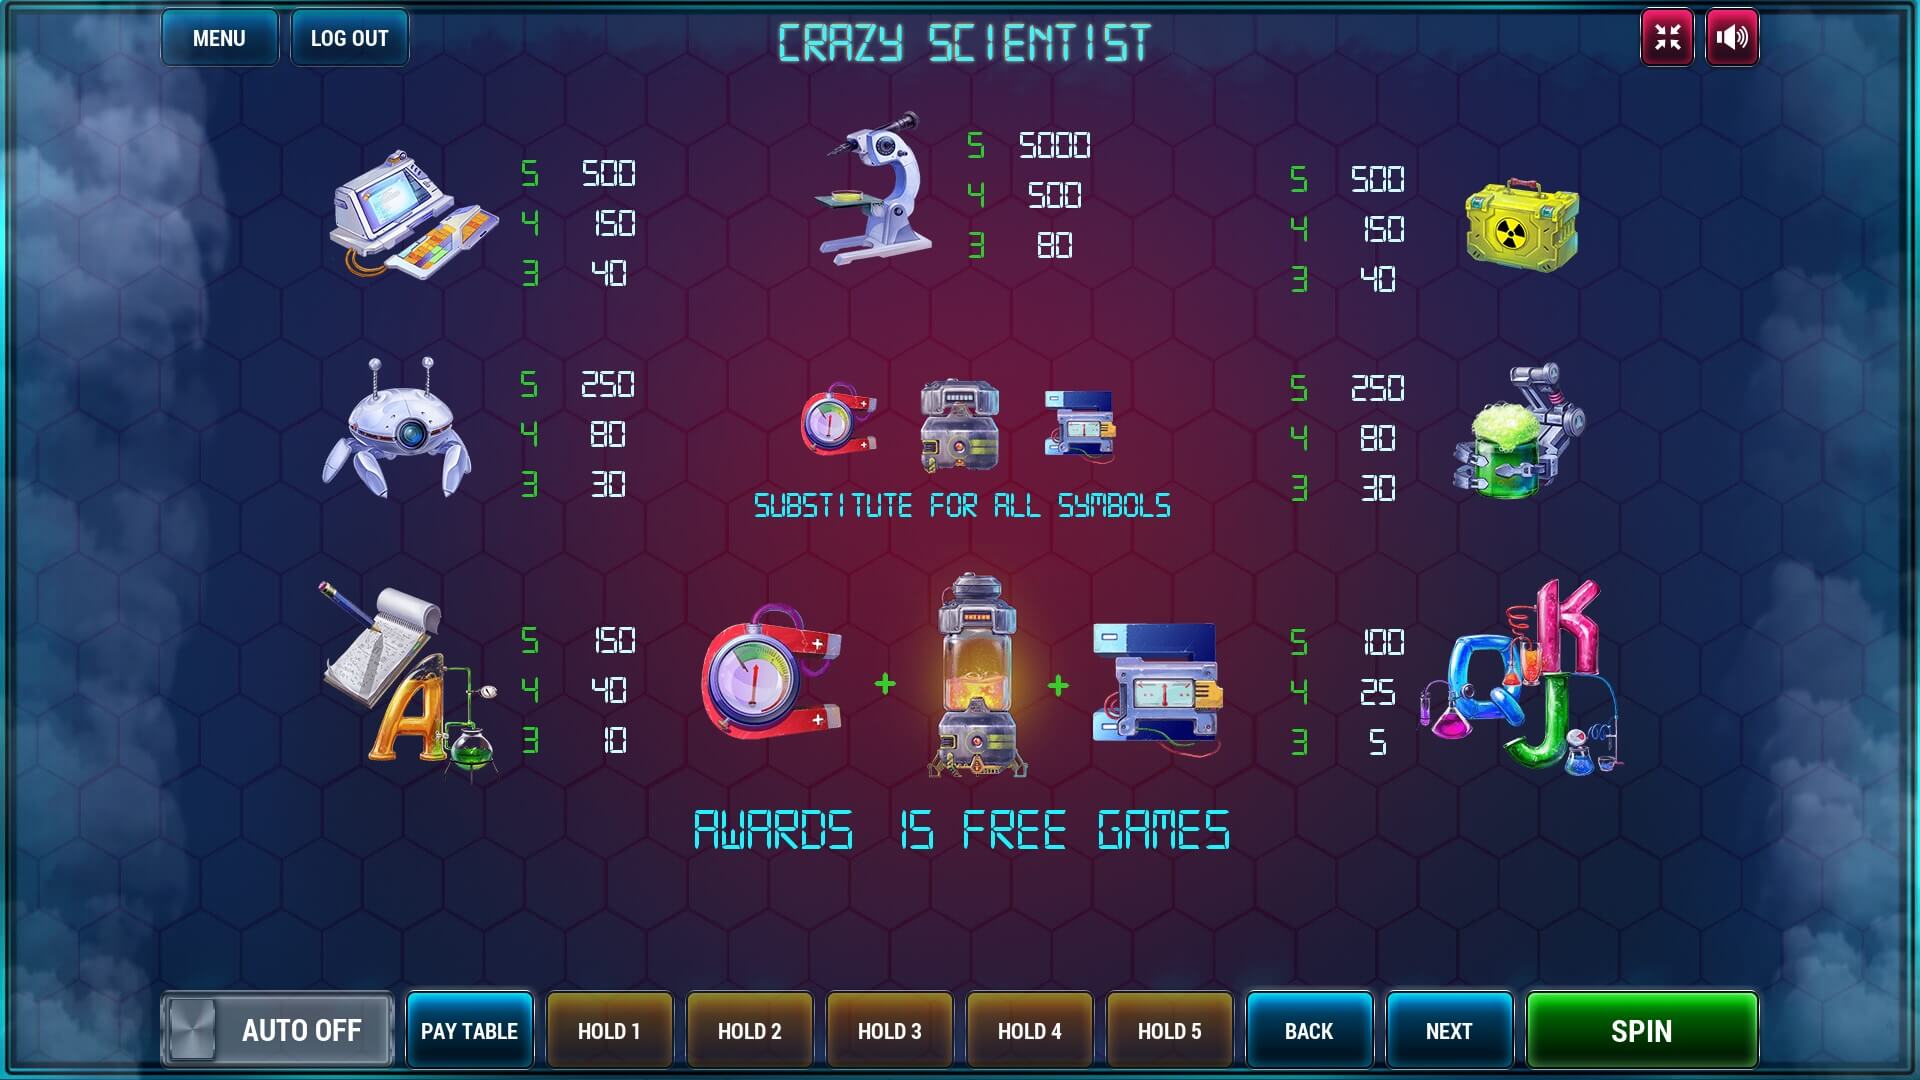 Crazy Scientist screenshot 3